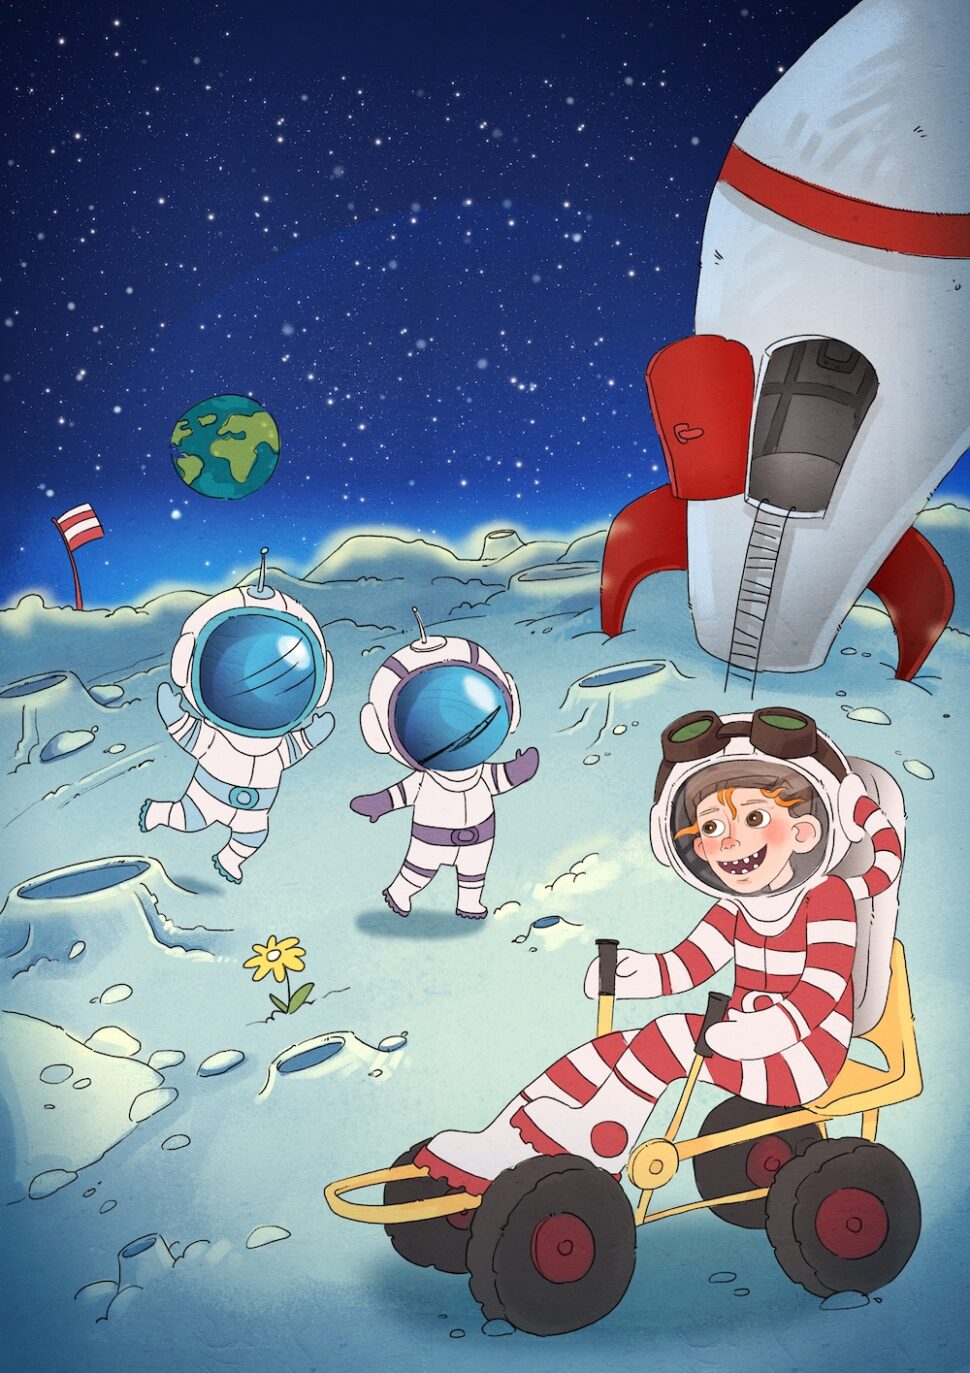 Vilter og Den fabelagtige historie om dit barn på månen